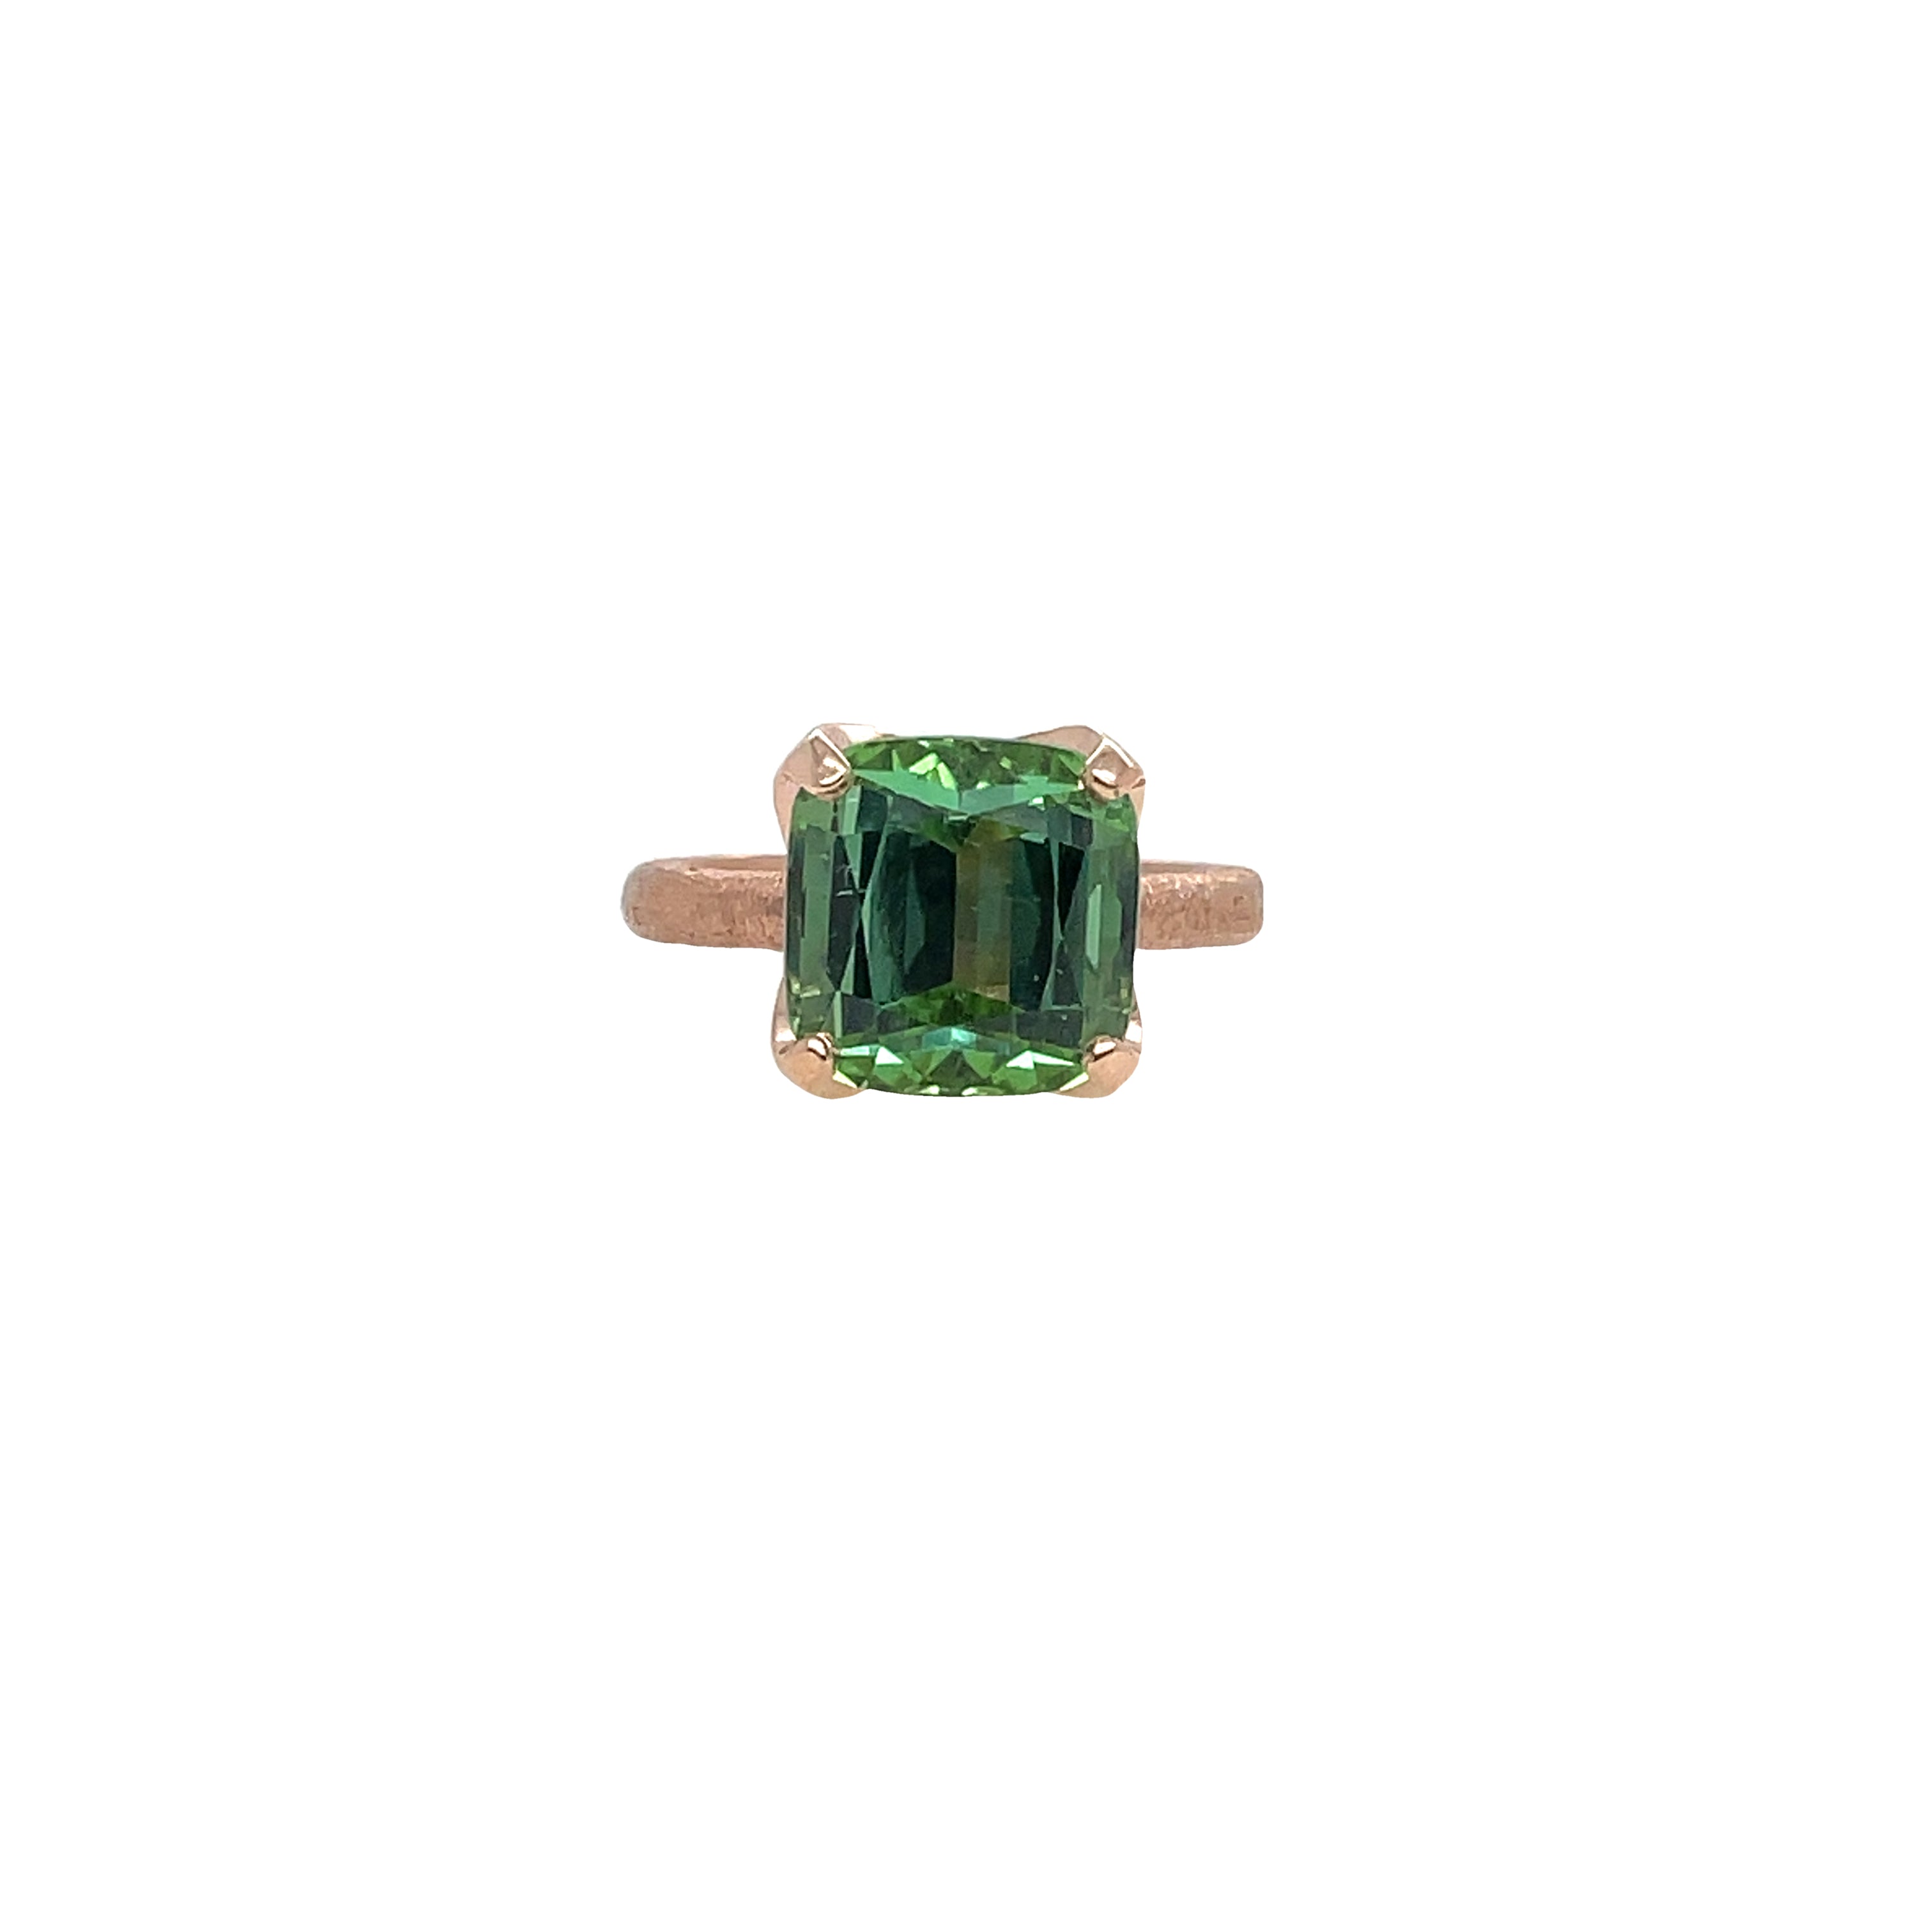 Exquisite Green Tourmaline Ring